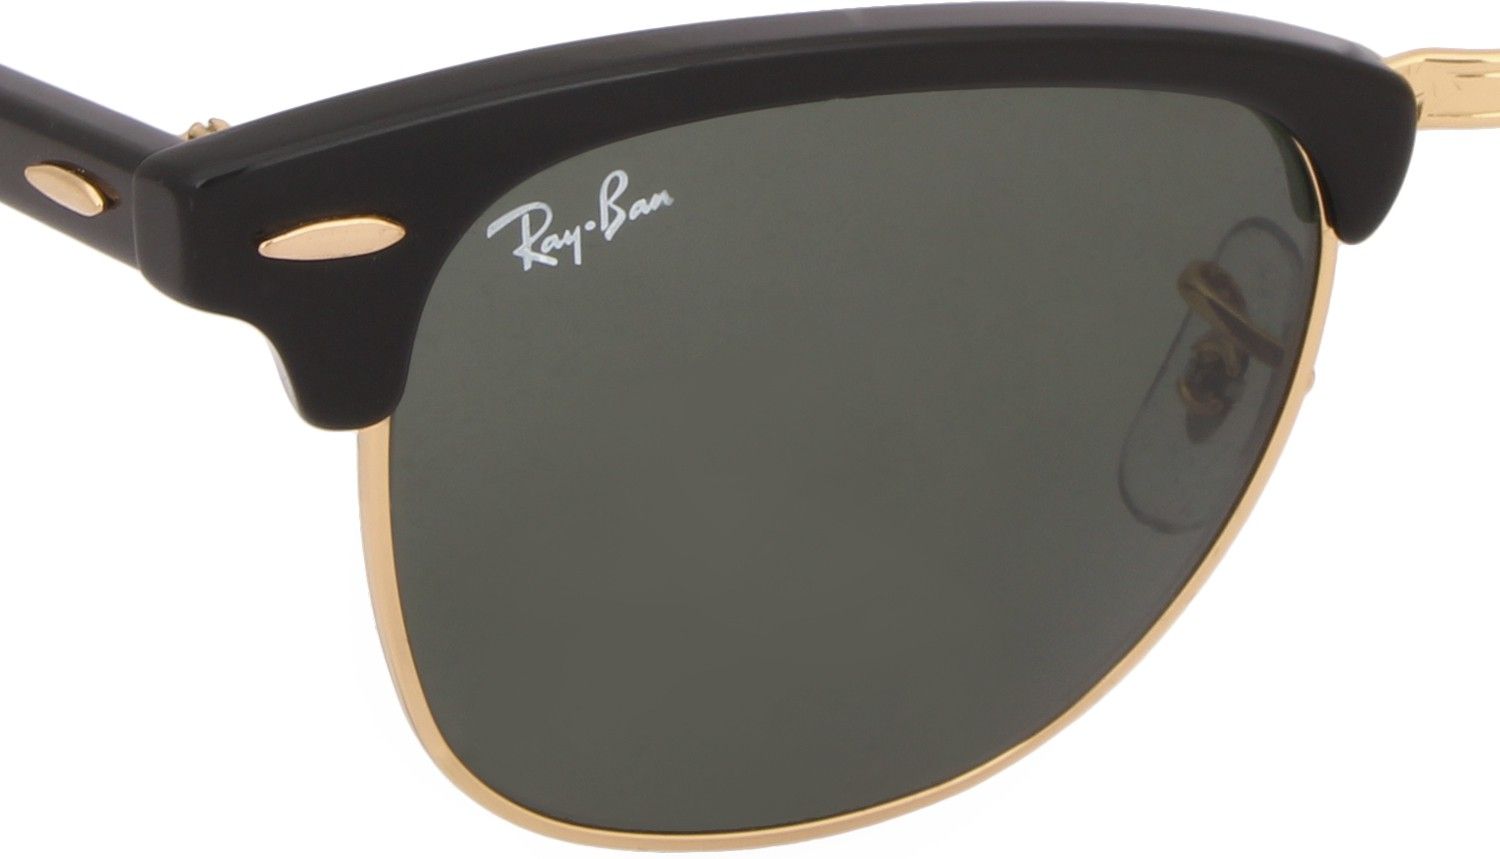 New Ray-Ban RB3016 Clubmaster Black Polarized Sunglasses | eBay